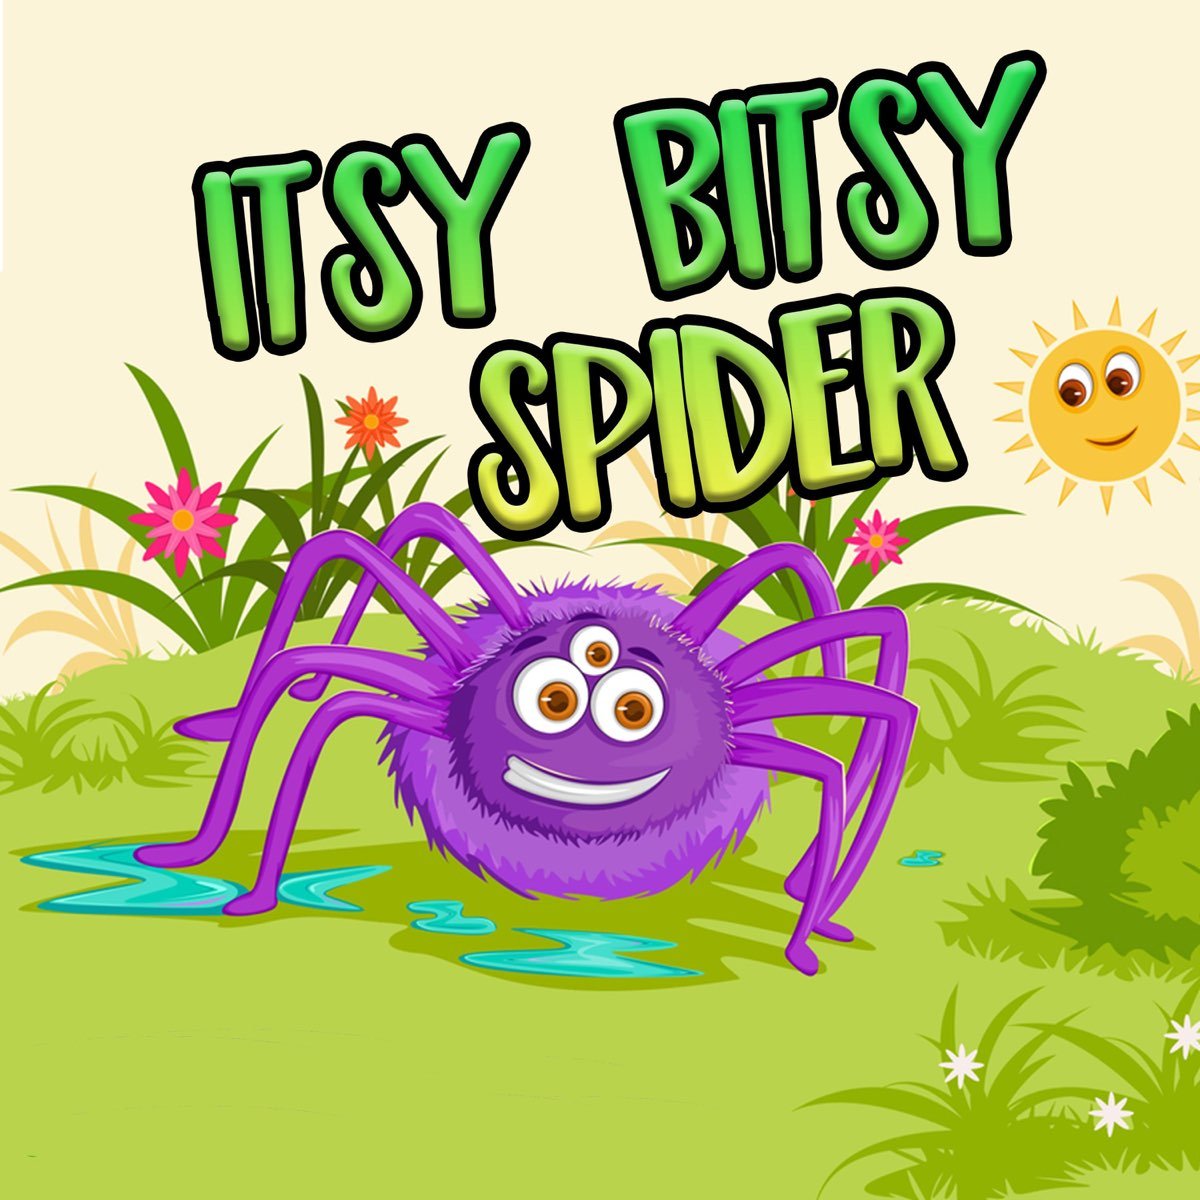 Itsy Bitsy Spider by Baby Nursery Rhymes